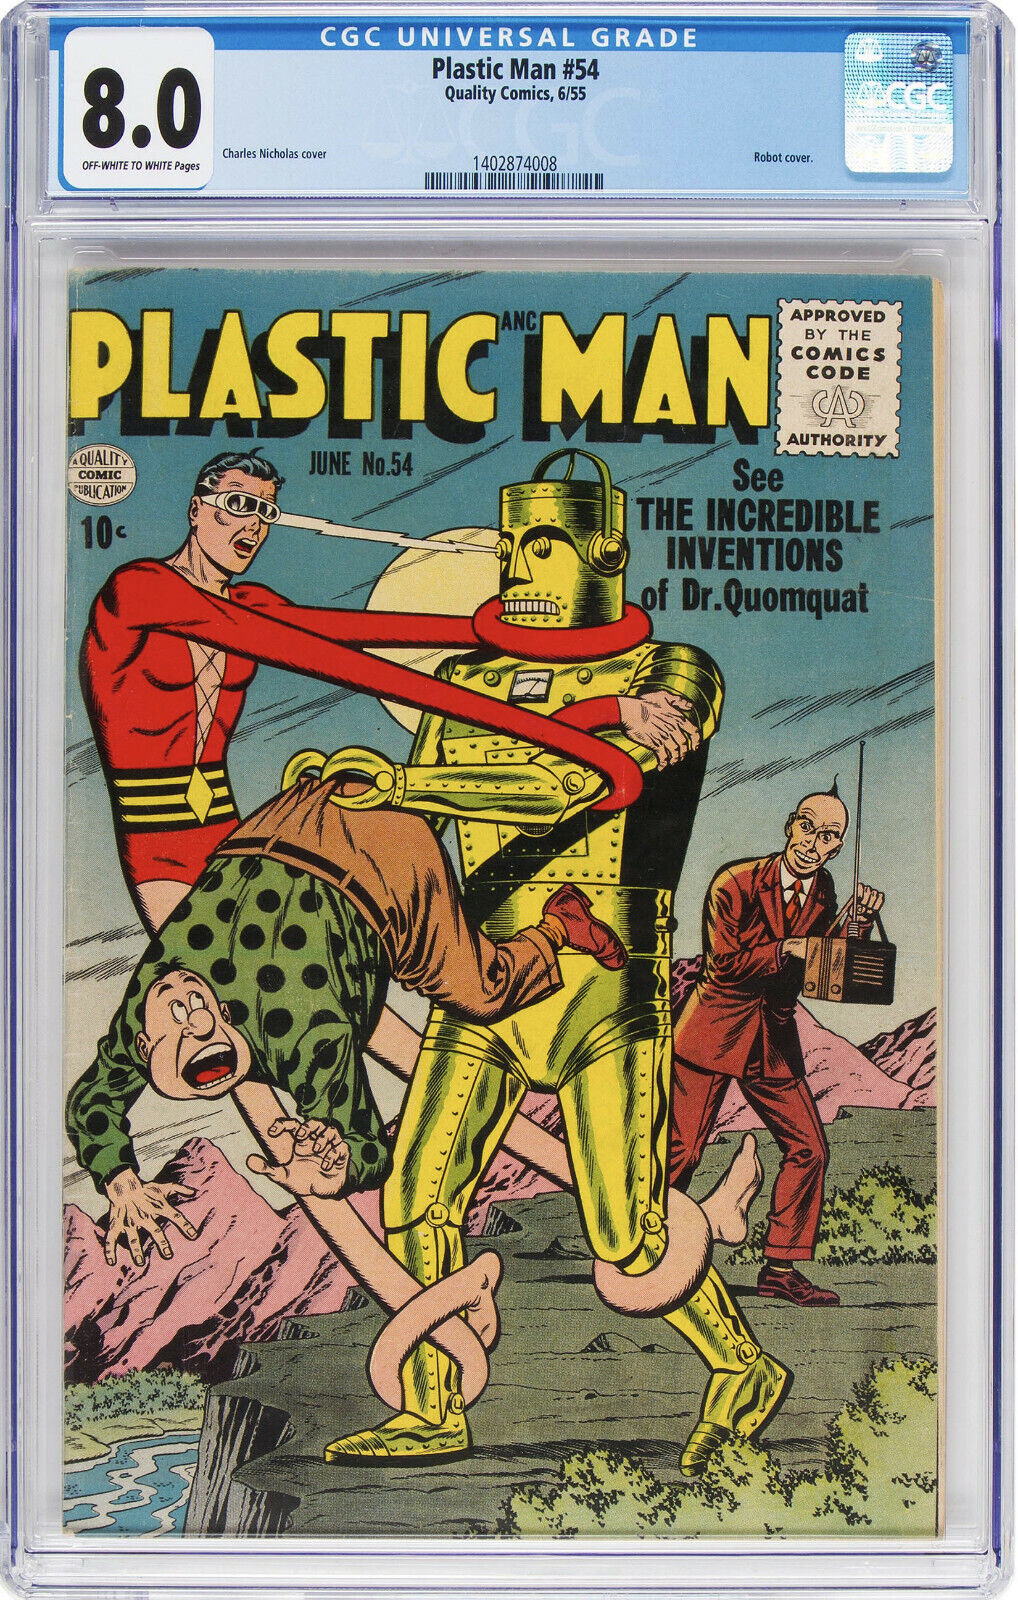 PLASTIC MAN #54 CGC 8.0 - FANTASTIC ROBOT COVER - RARE 1955 GOLDEN AGE